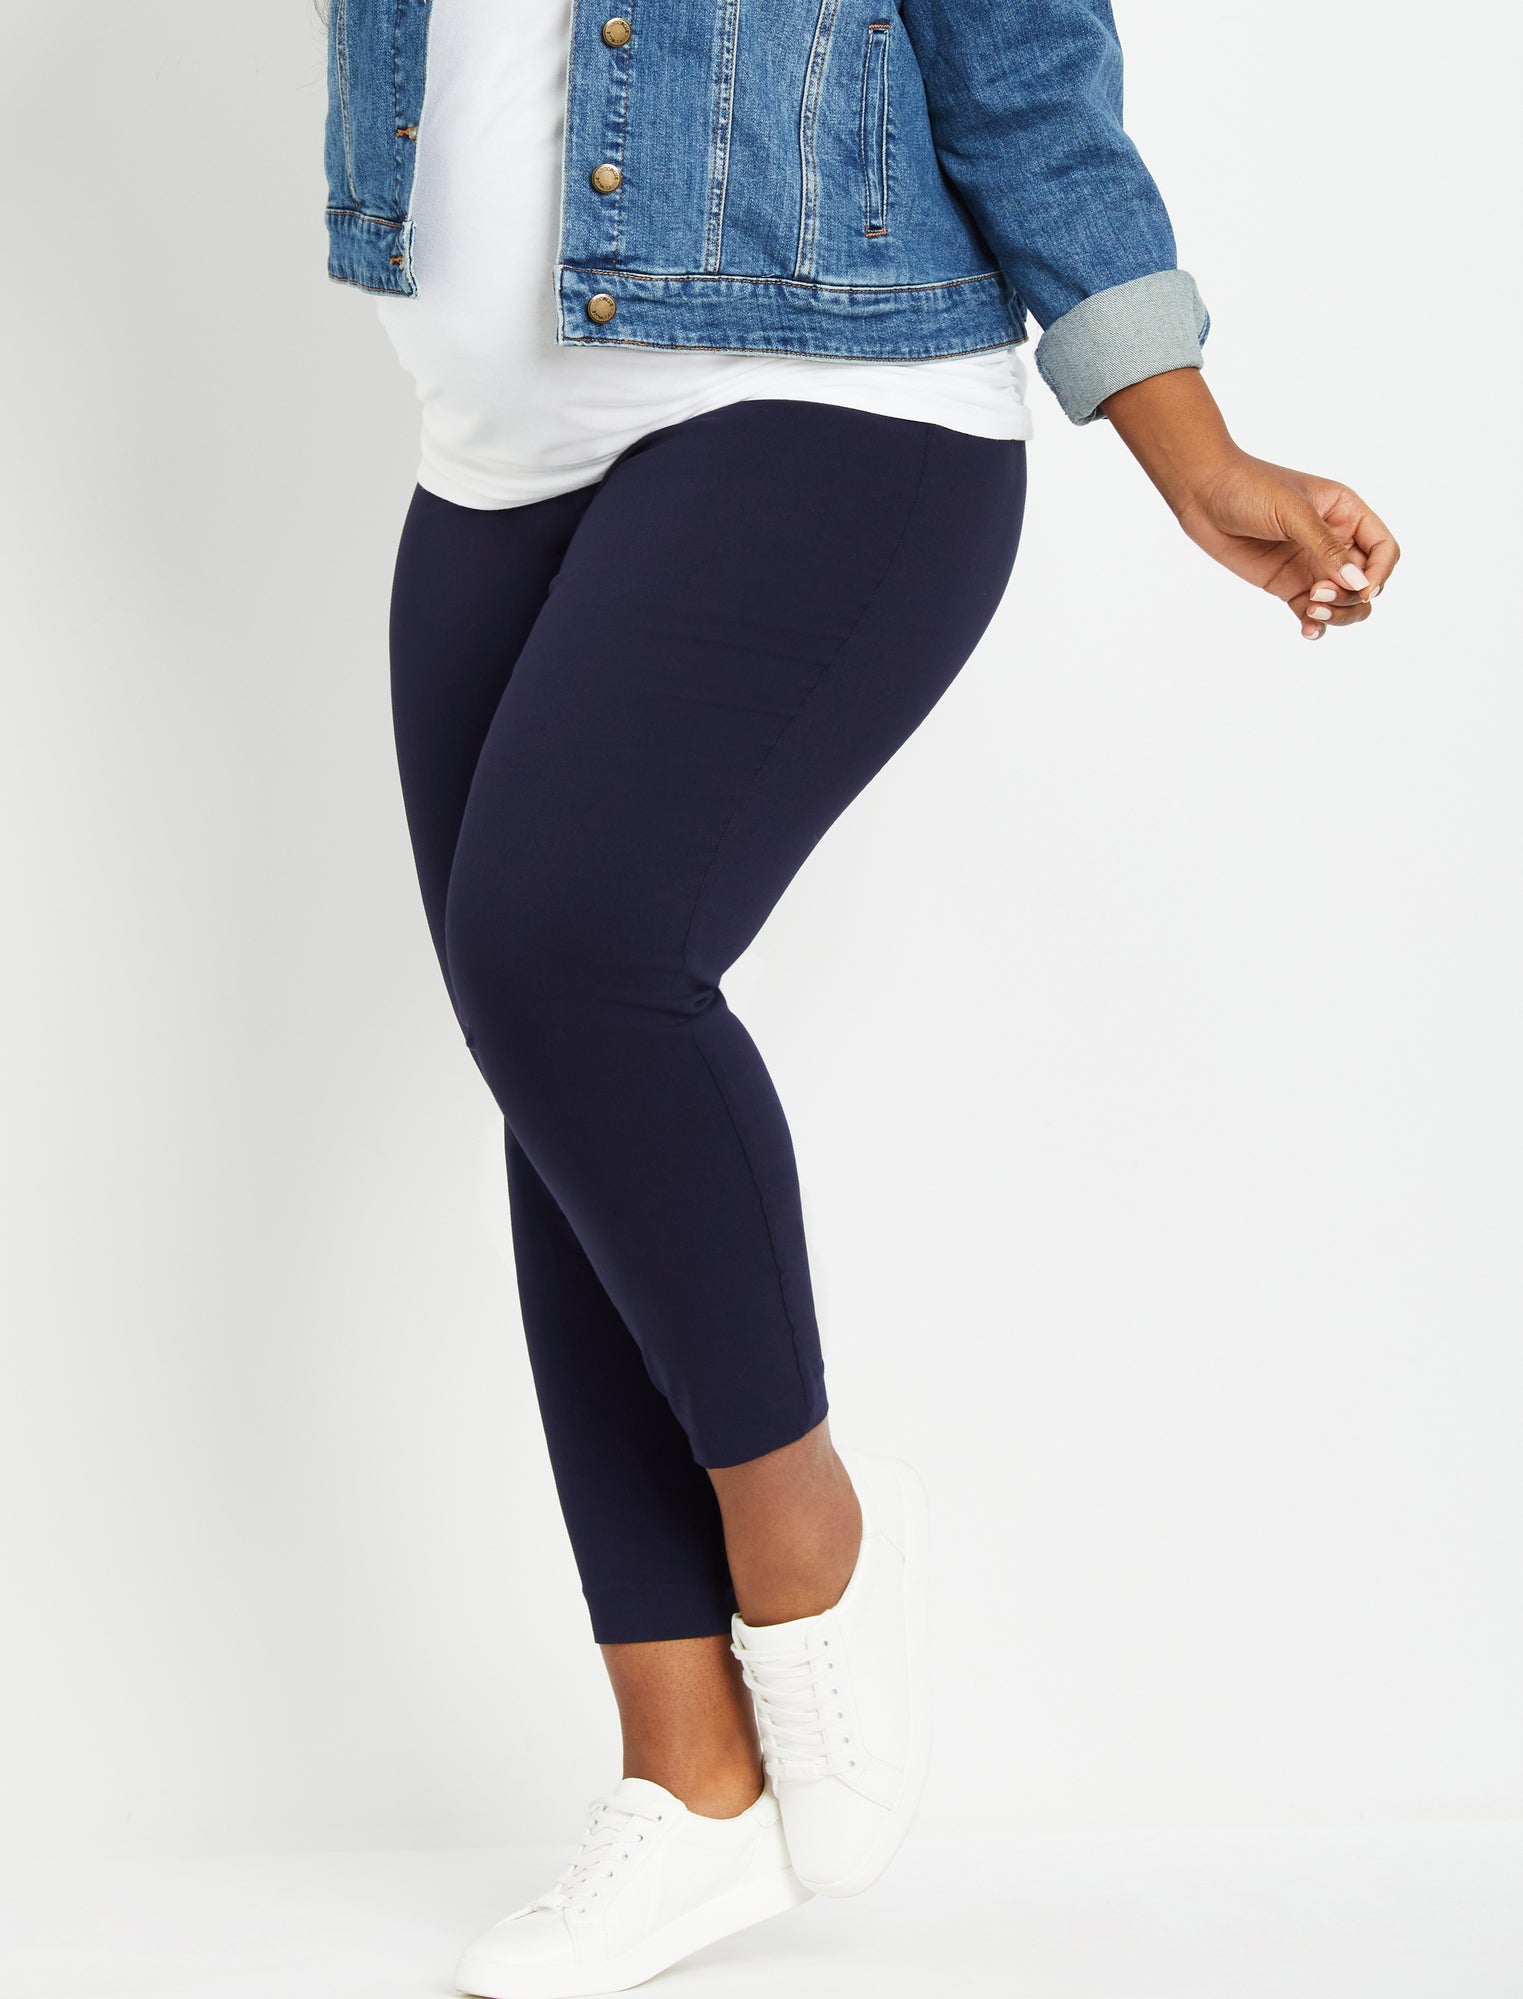 Bycc Bynn Womens Plus Size Stretch Leggings Full-Length Ultra Soft Tights  Pants(Navy Blue,XXL) at  Women's Clothing store